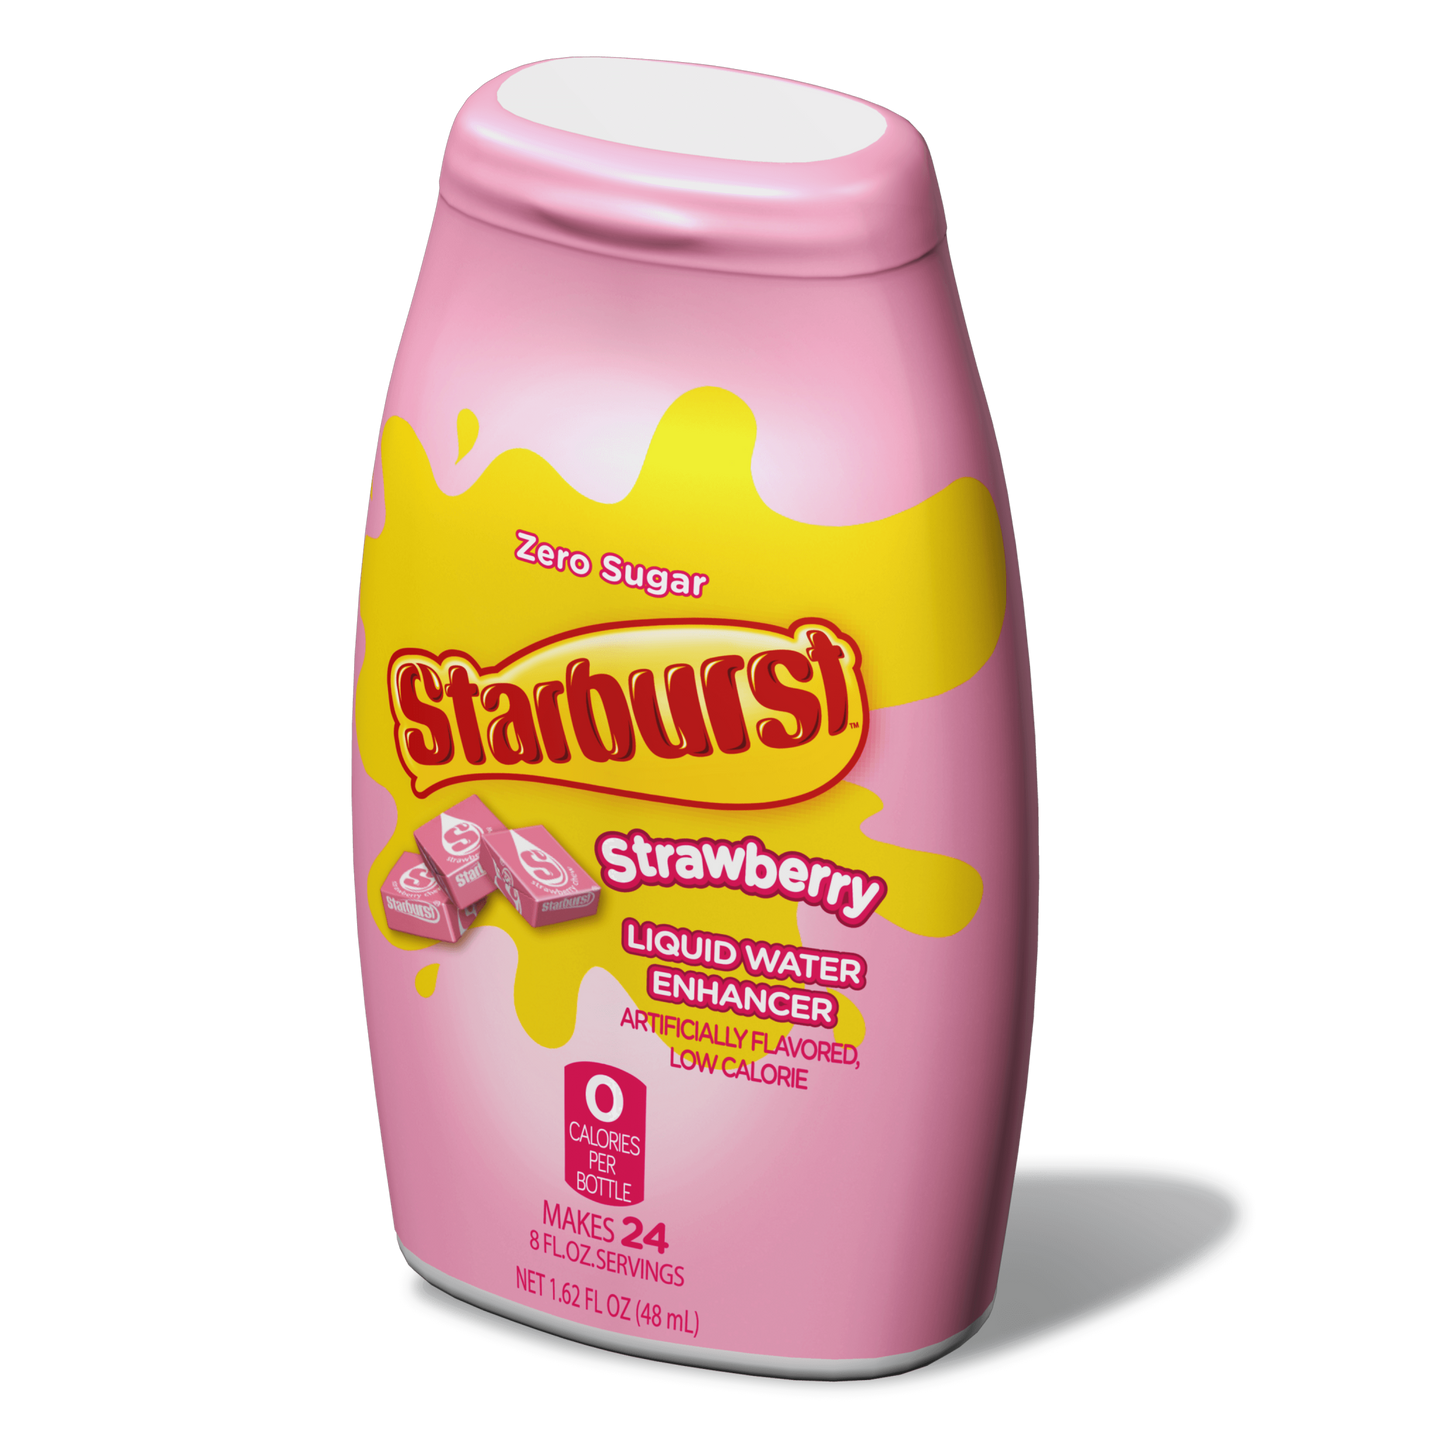 Starburst strawberry liquid water enhancer packaging